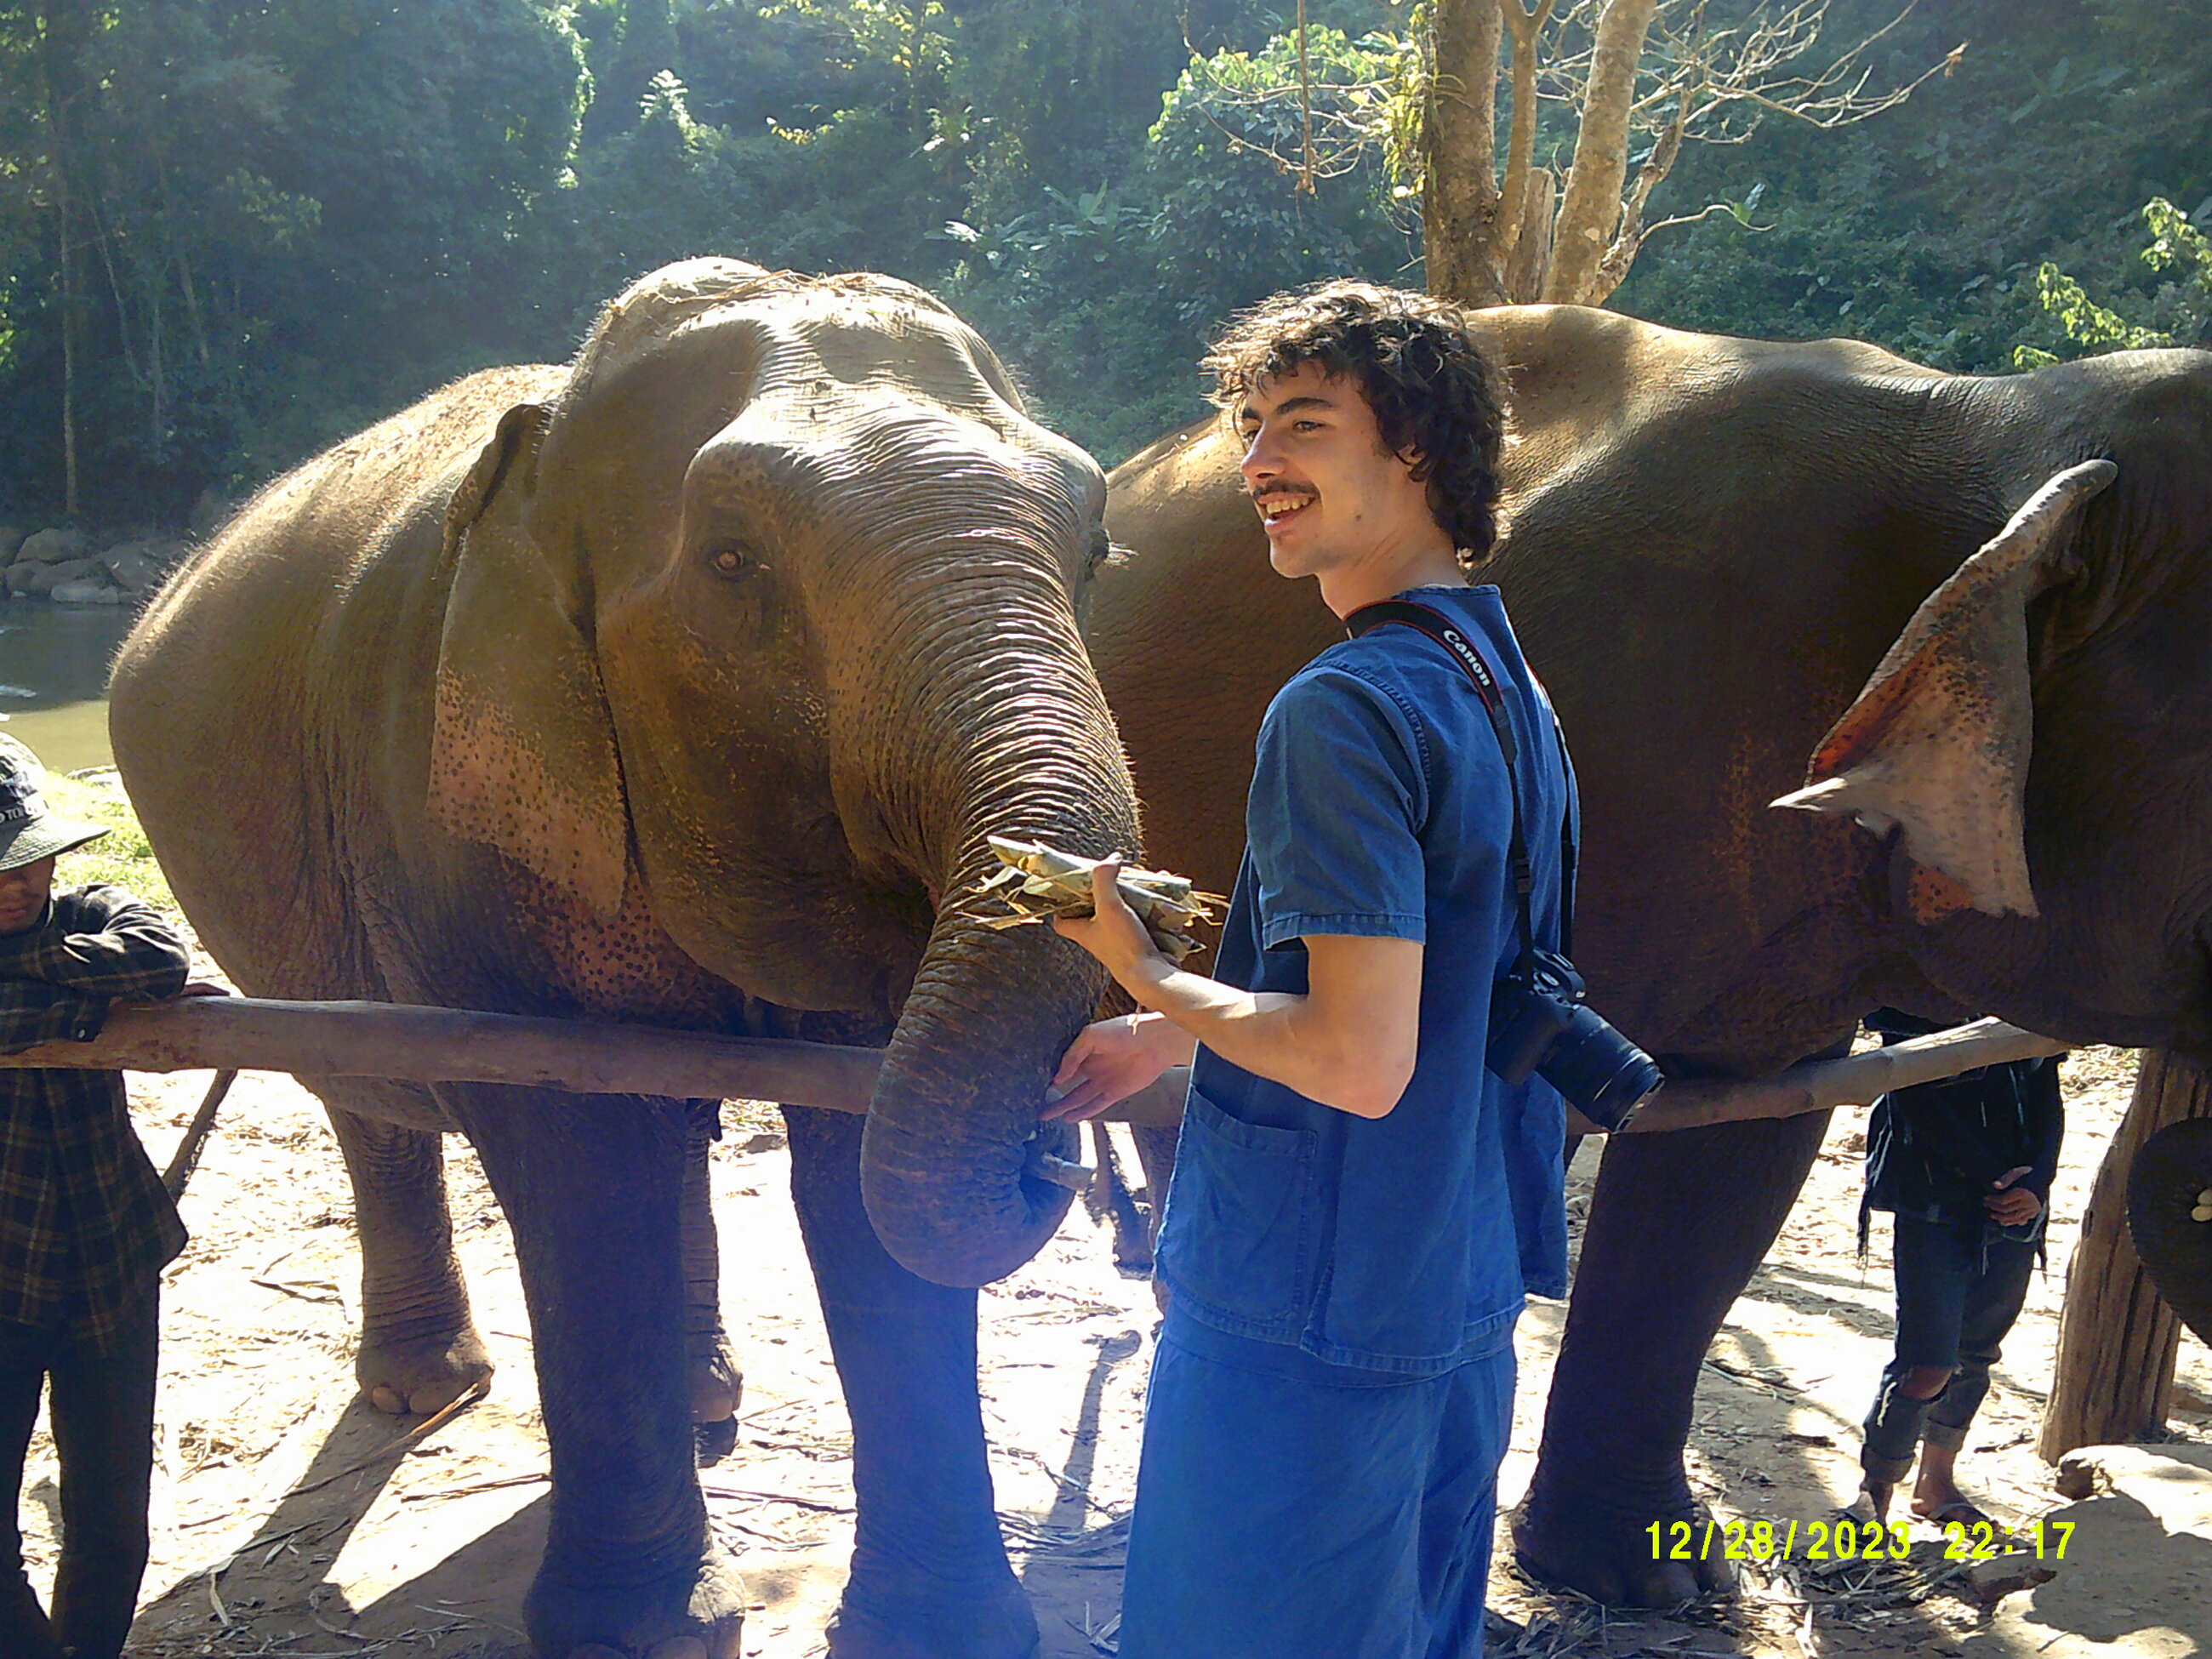 Feeding the elephants! 